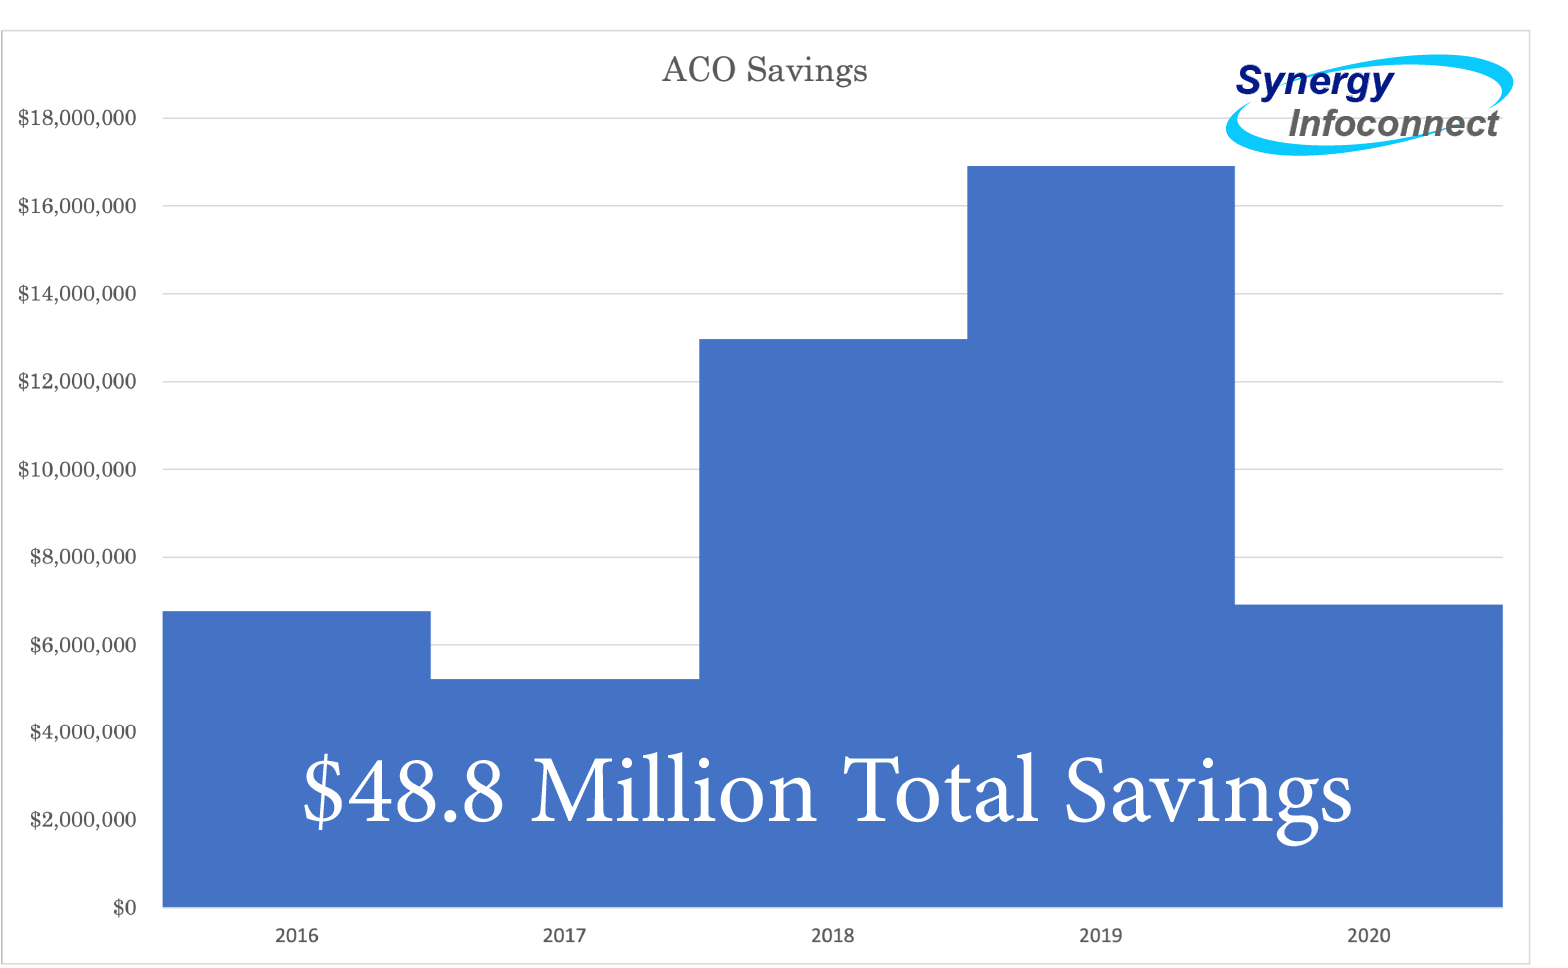 Synergy's affiliated ACO Savings